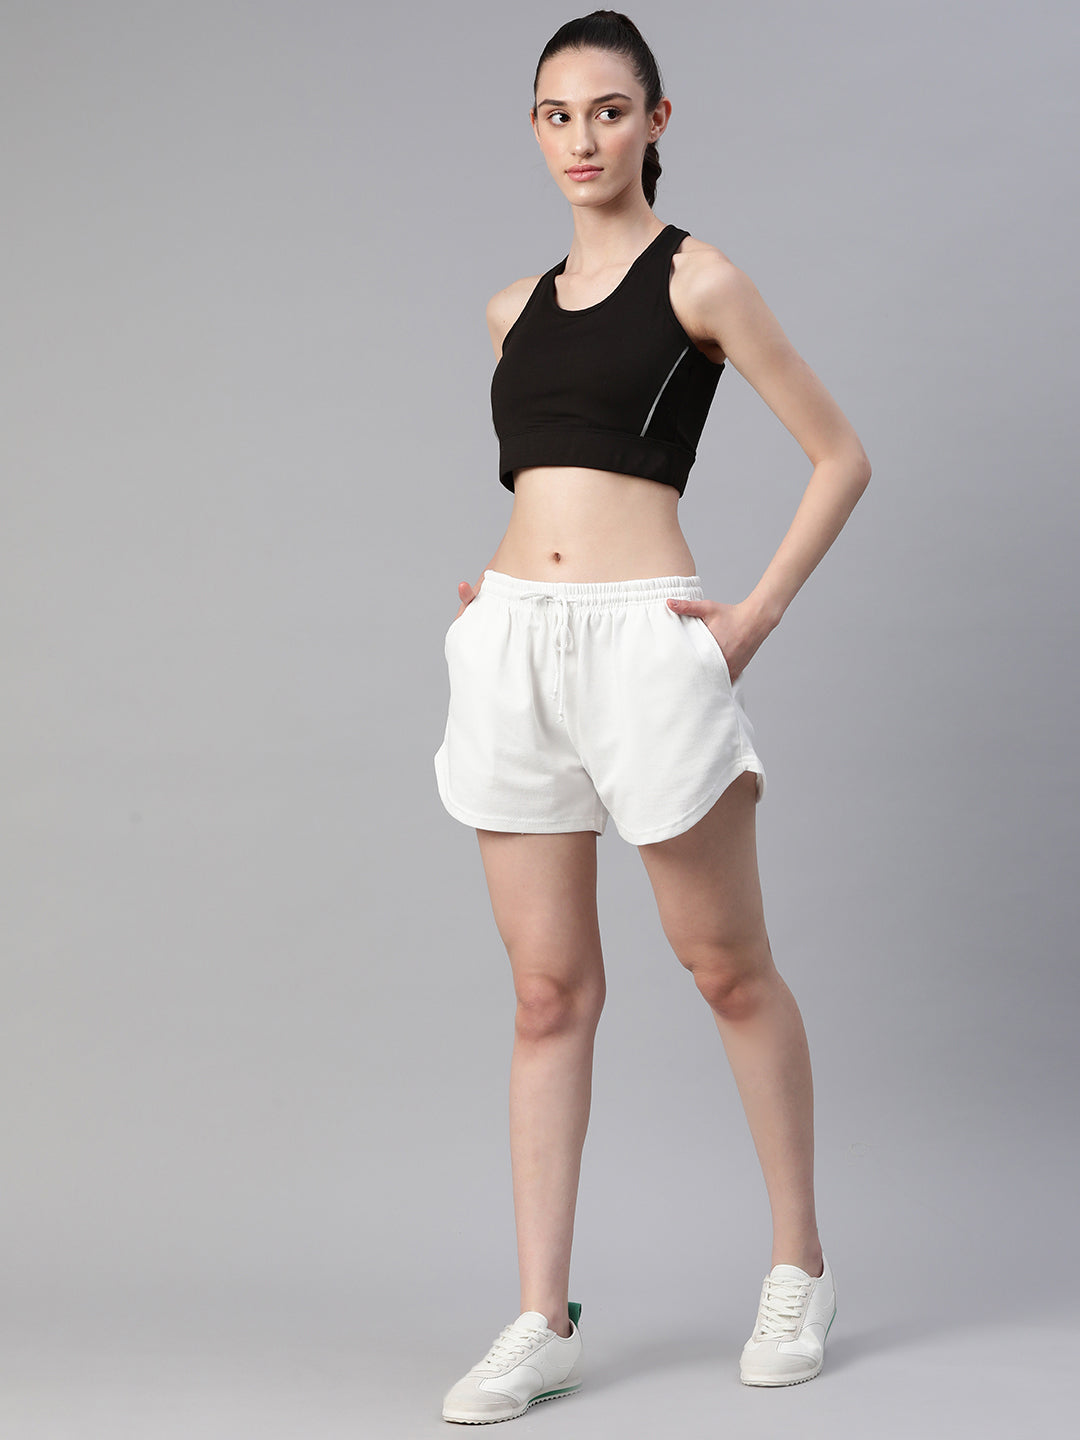 laabha women summer stylish shorts